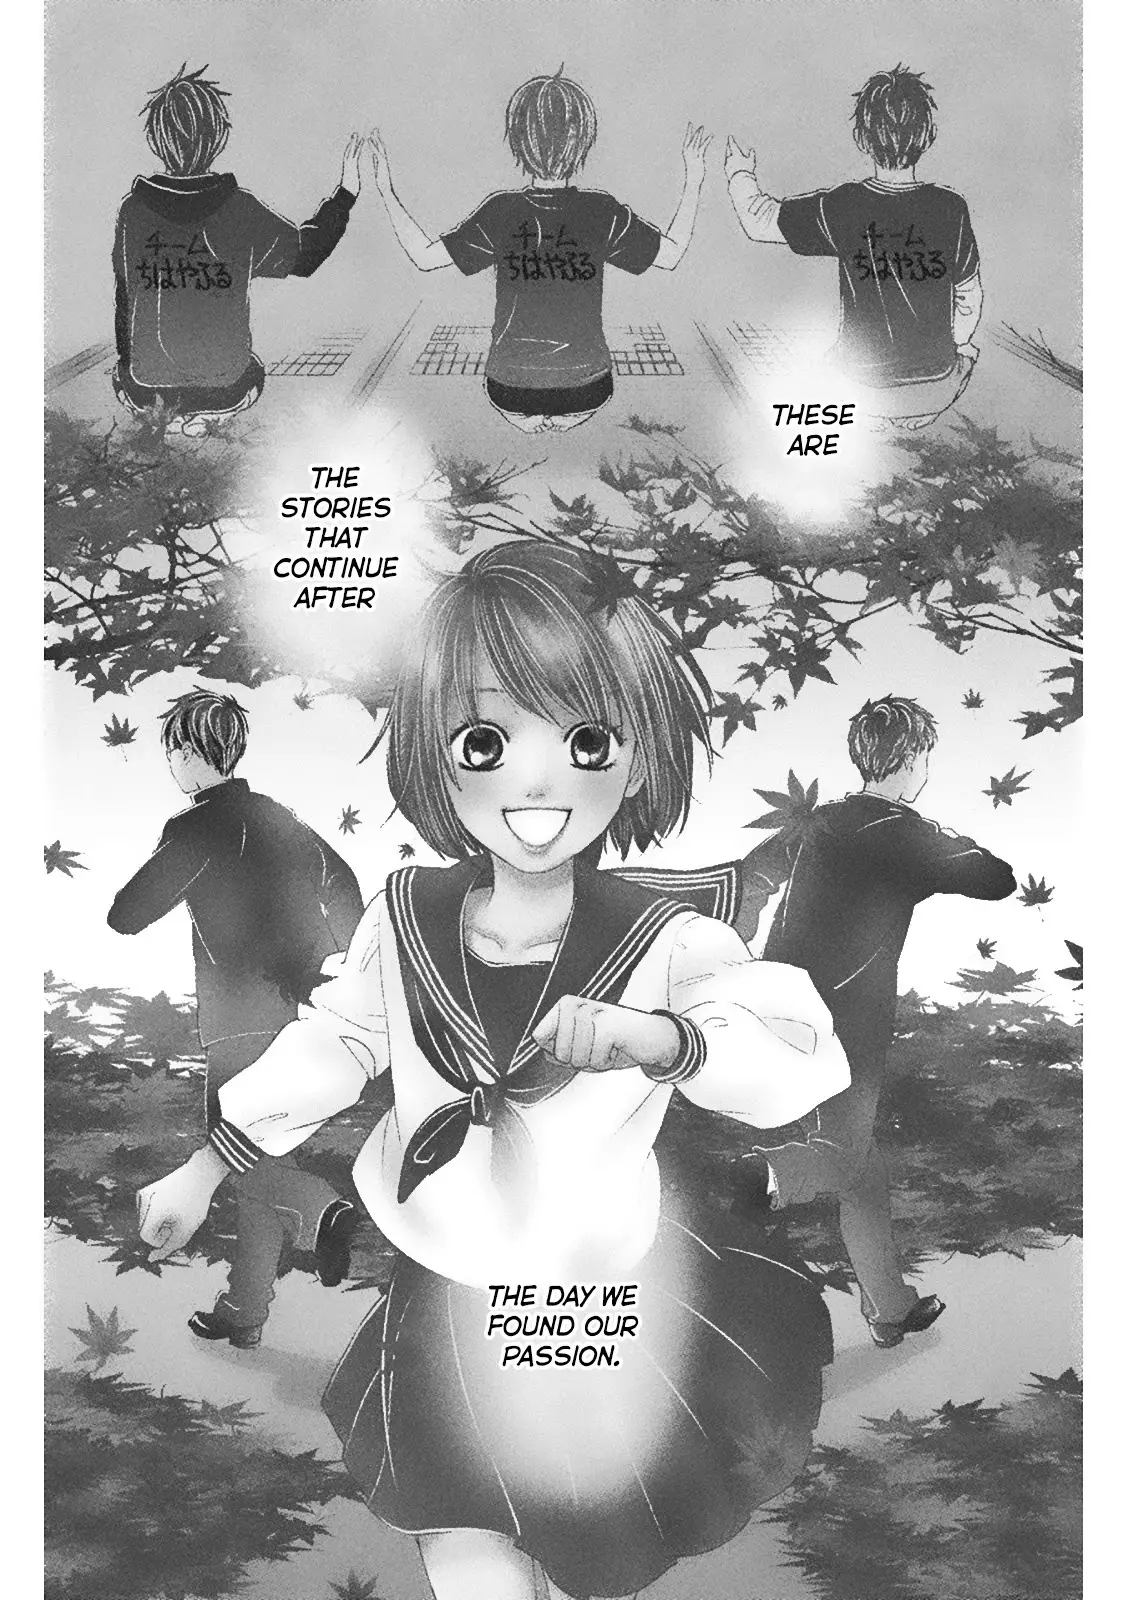 Chihayafuru: Middle School Arc - 1 page 6